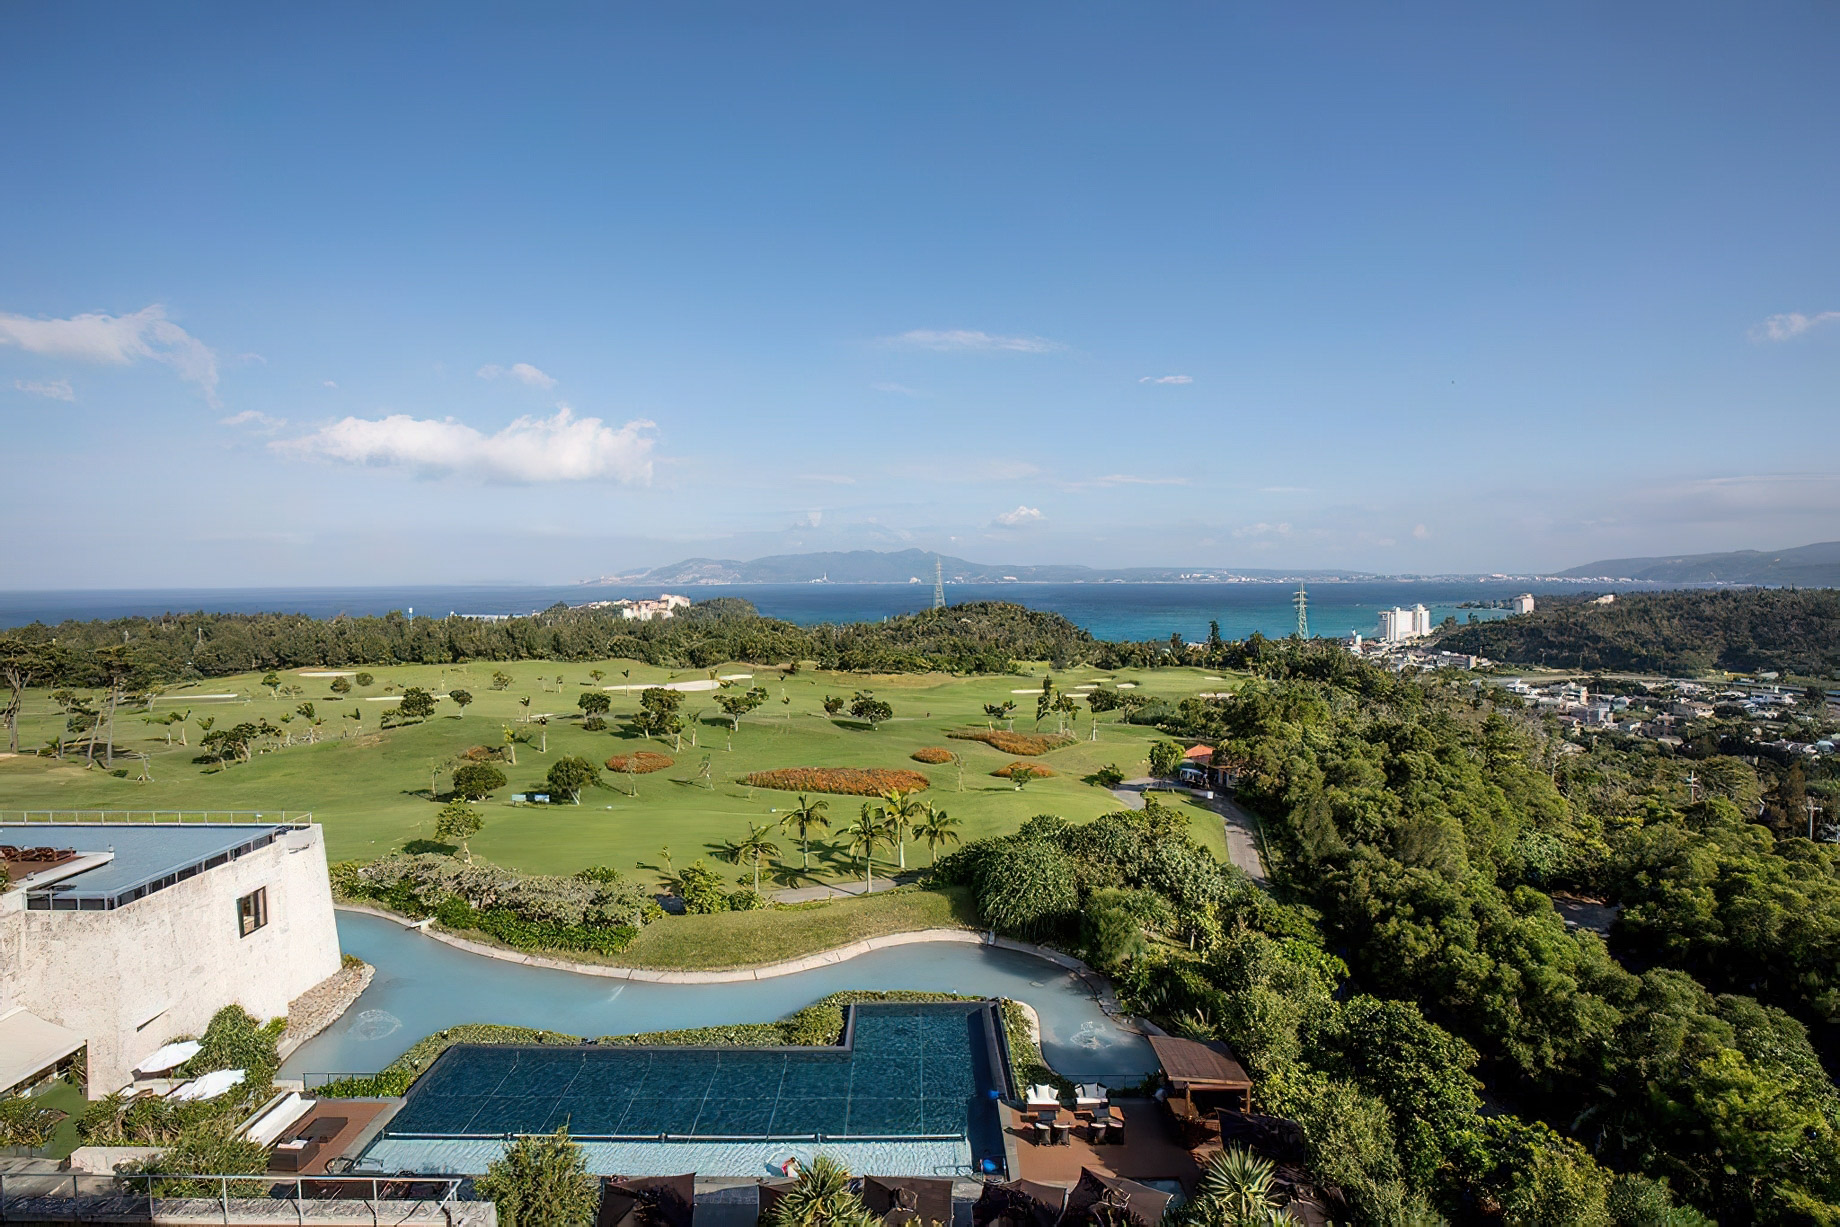 The Ritz-Carlton, Okinawa Hotel - Okinawa, Japan - Exterior Ocean View